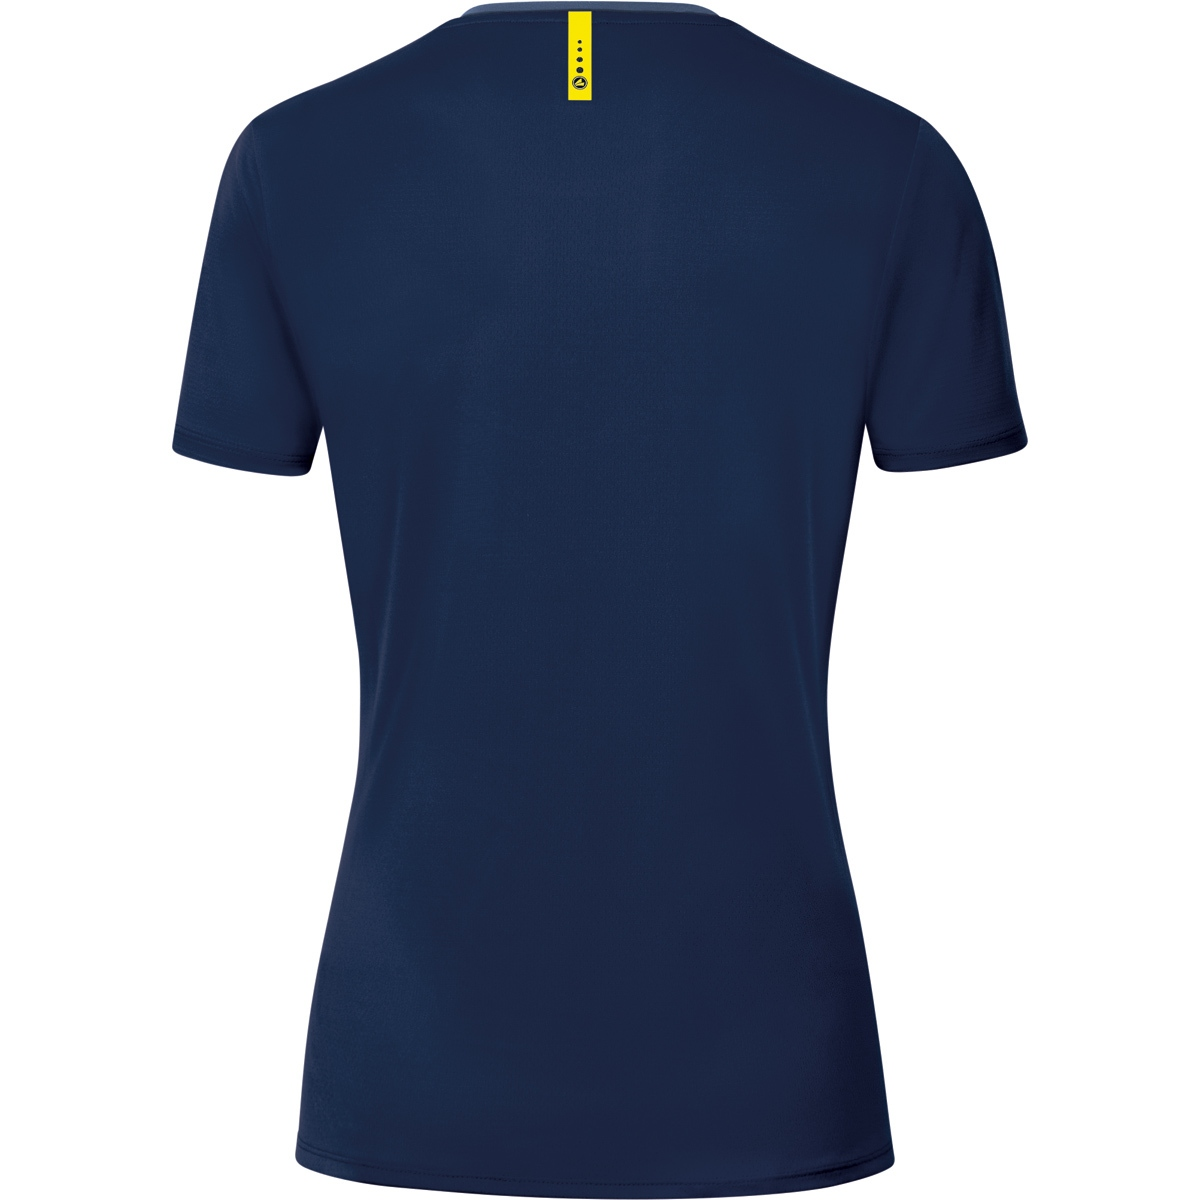 marine/darkblue/neongelb, Champ Damen, 6120 JAKO 2.0 T-Shirt 44, Gr.